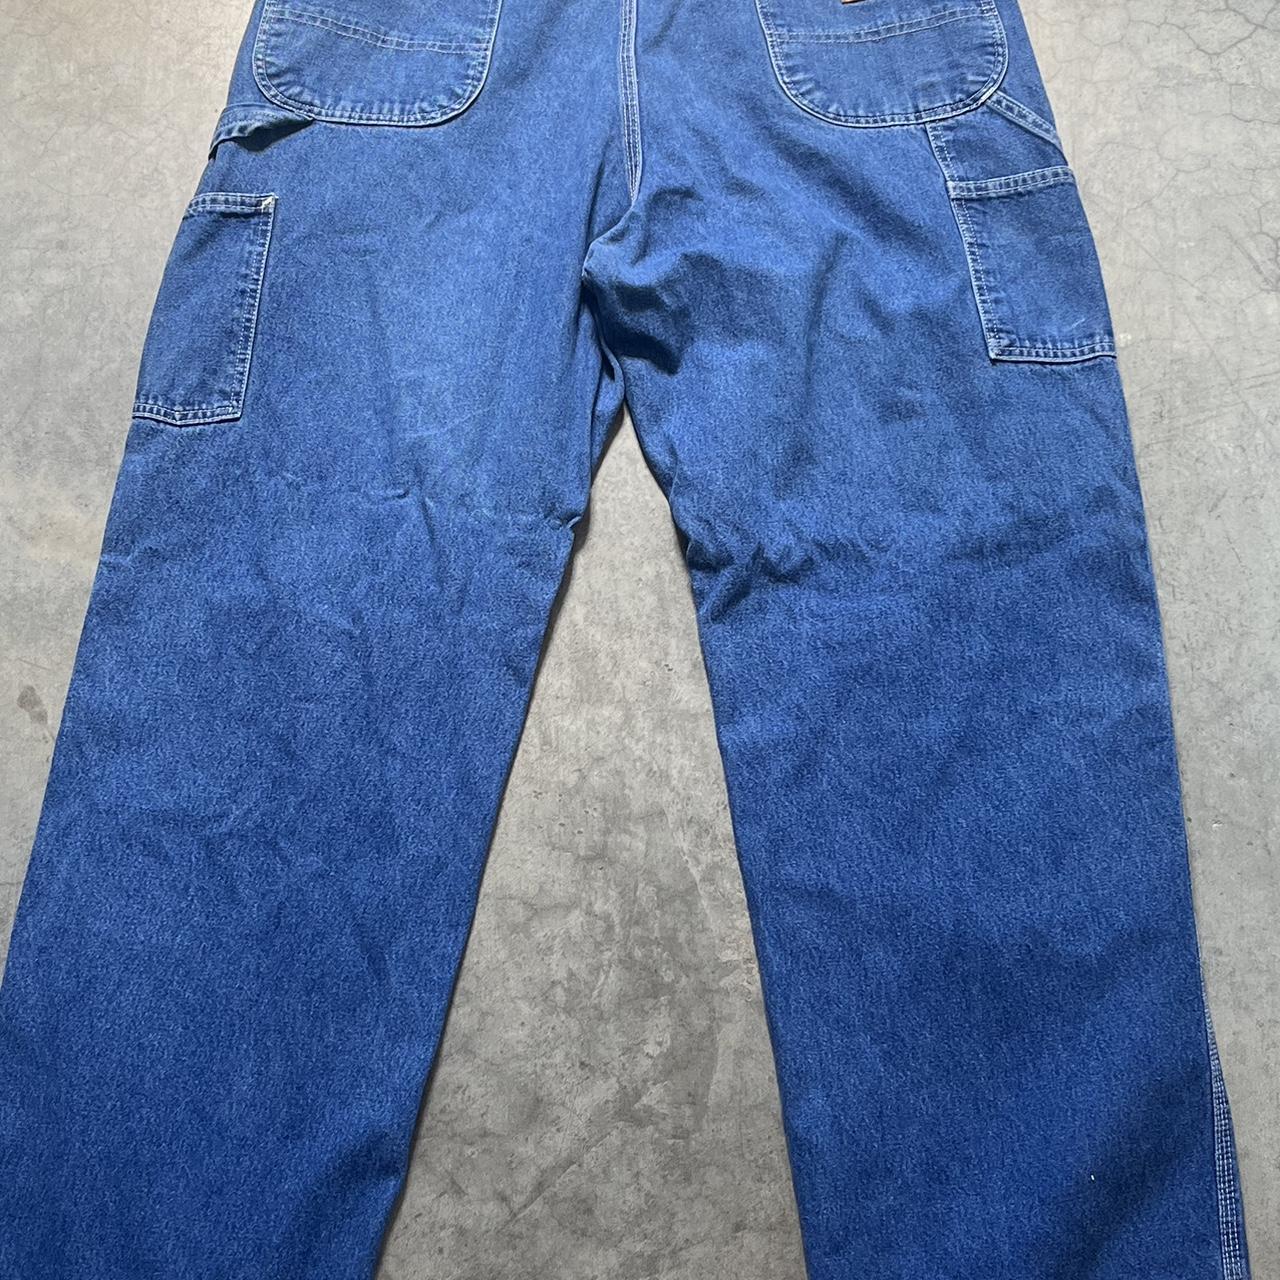 Carhartt 40x34 Carpenter Jeans B13 Original Dungaree... - Depop